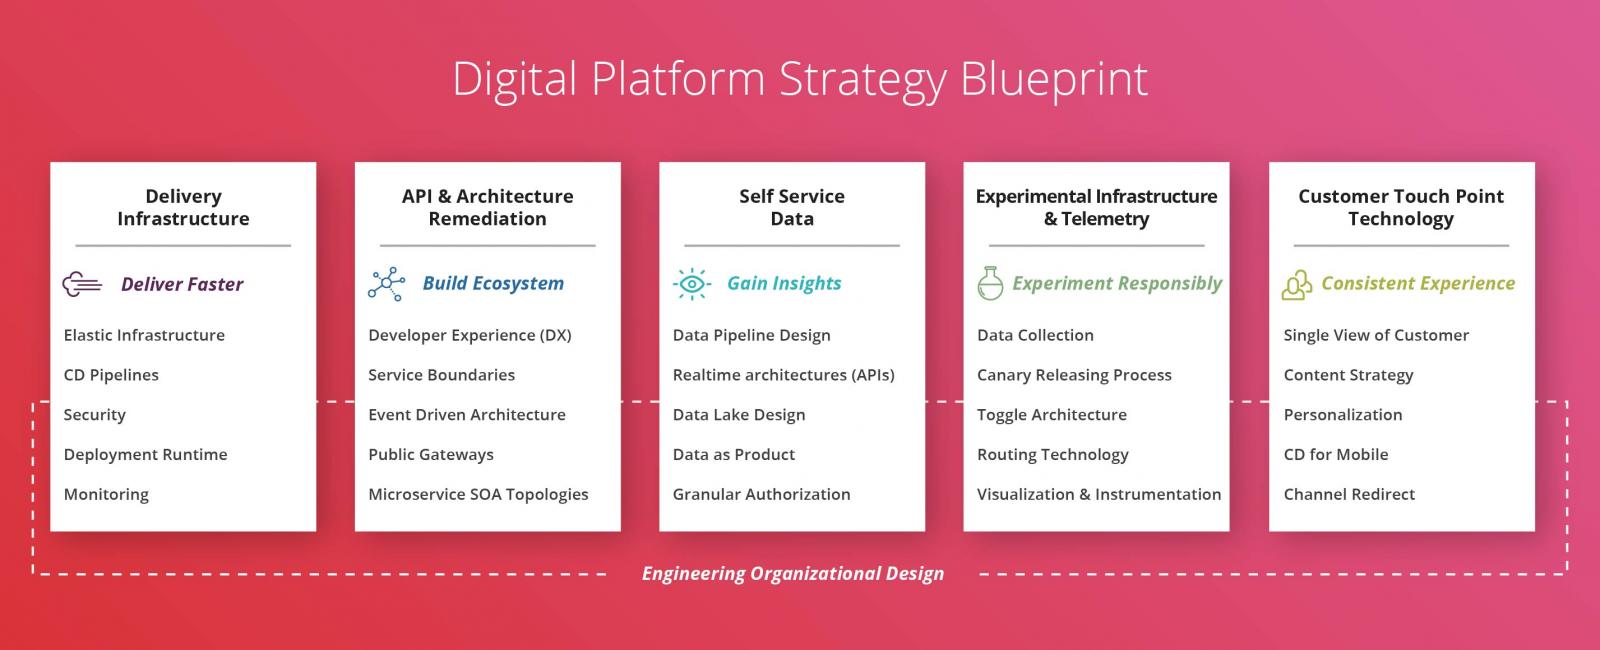 Illustration diagram describing the digital platform strategy blueprint